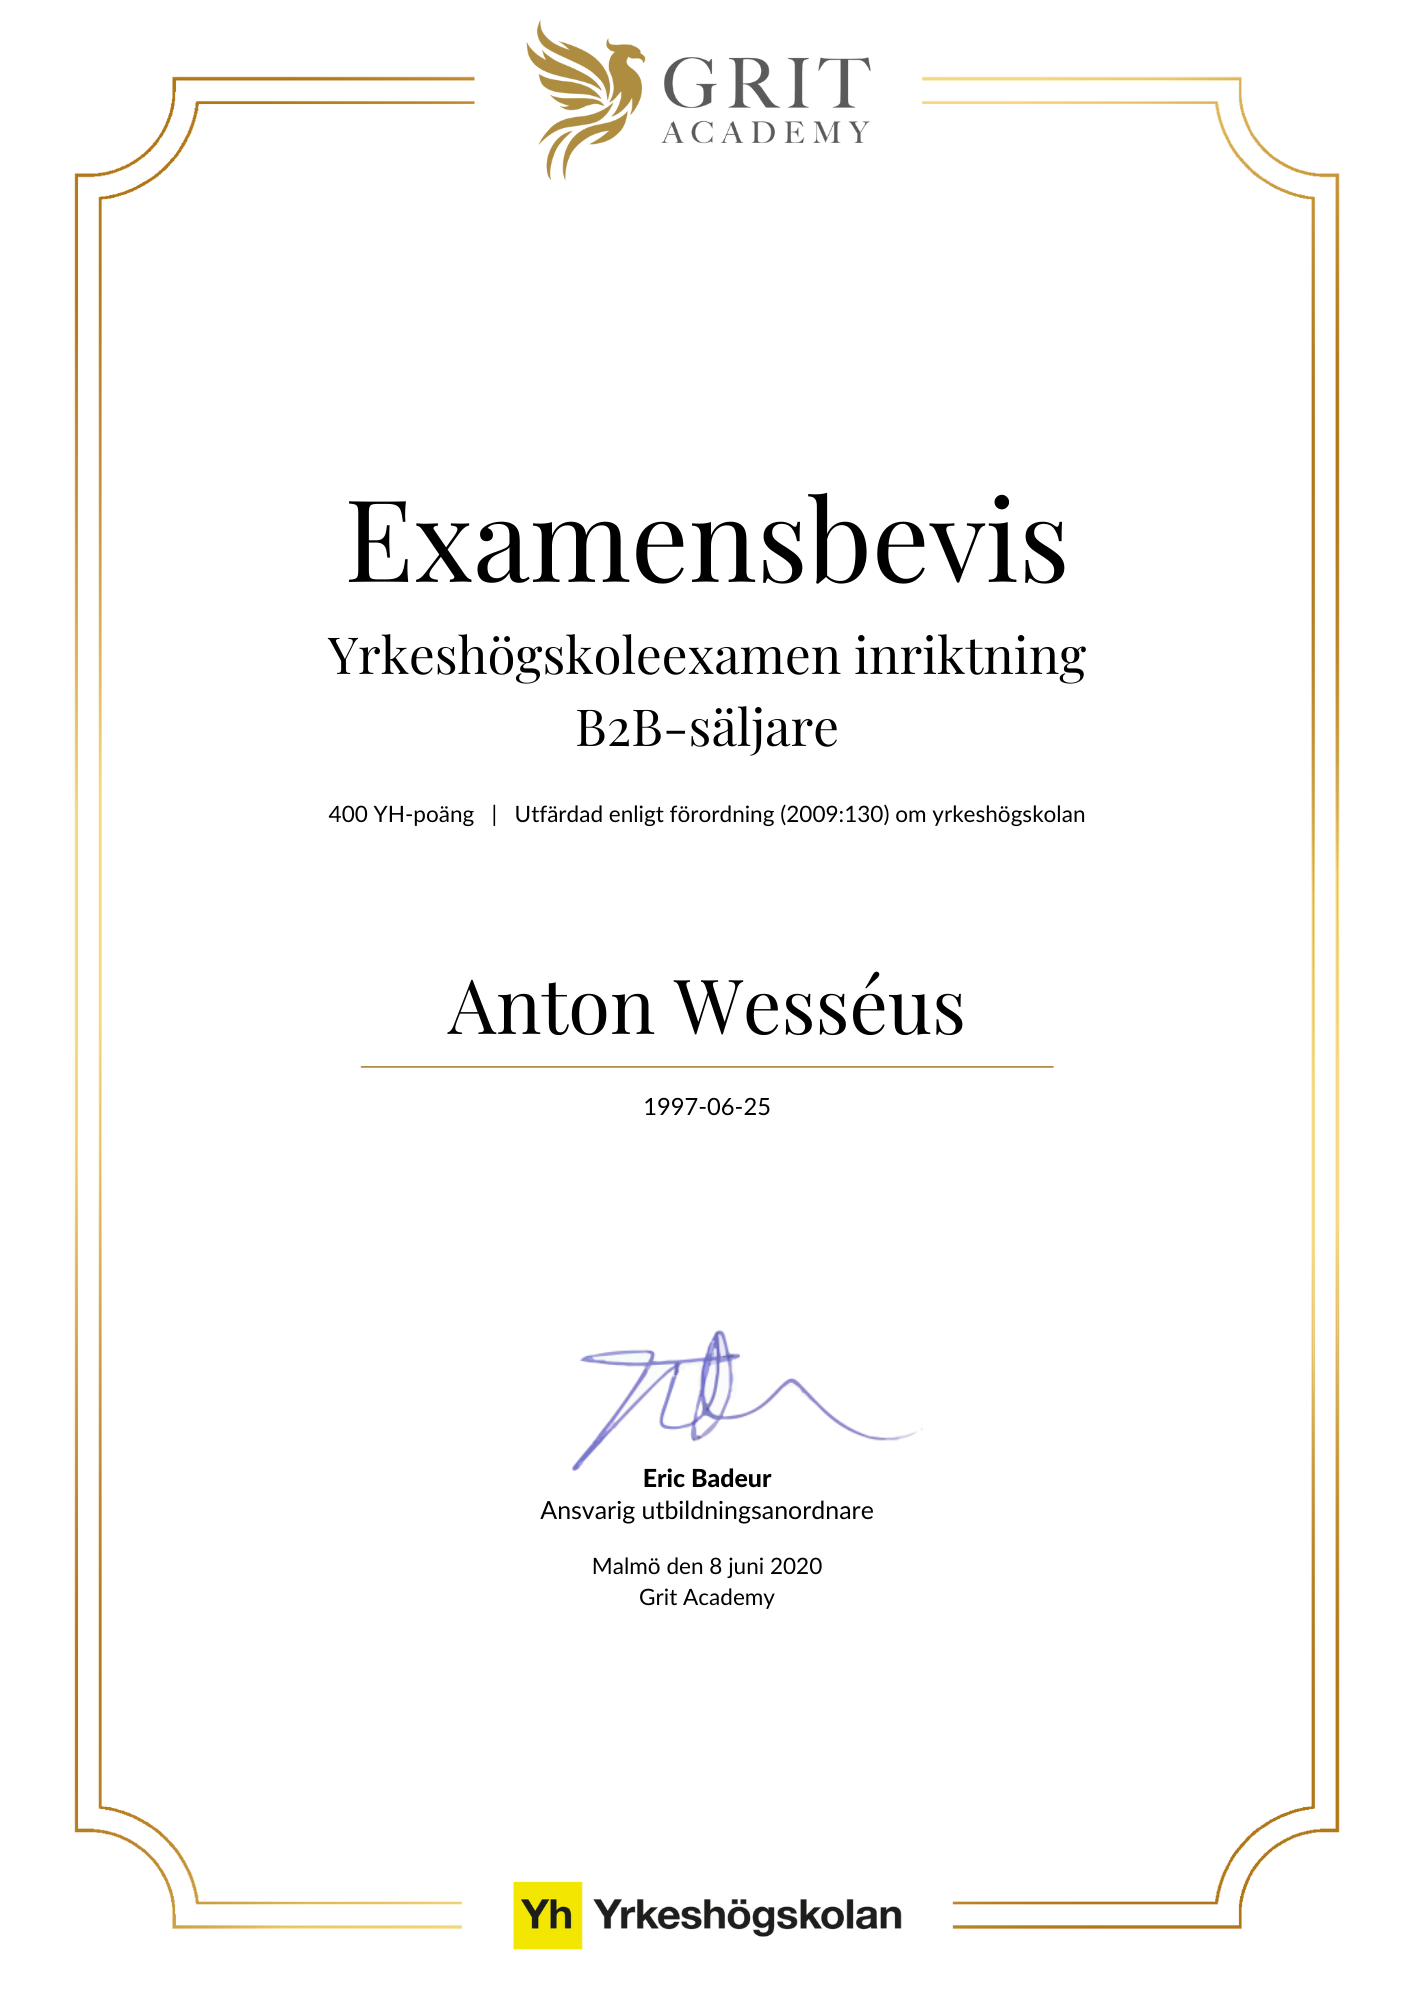 Examensbevis Anton Wesséus - 1